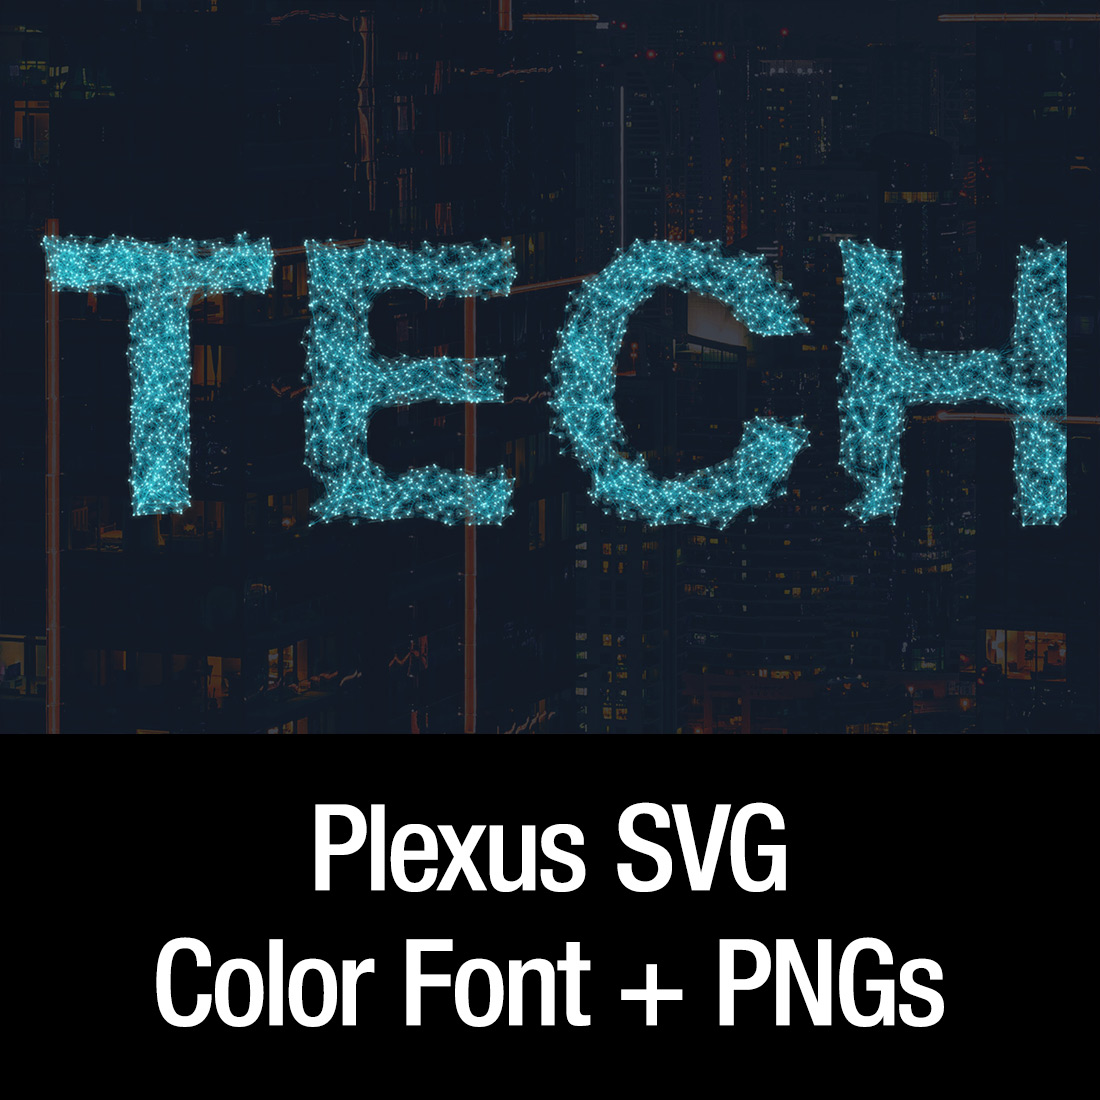 Opentype Font MS Plexus Design cover image.